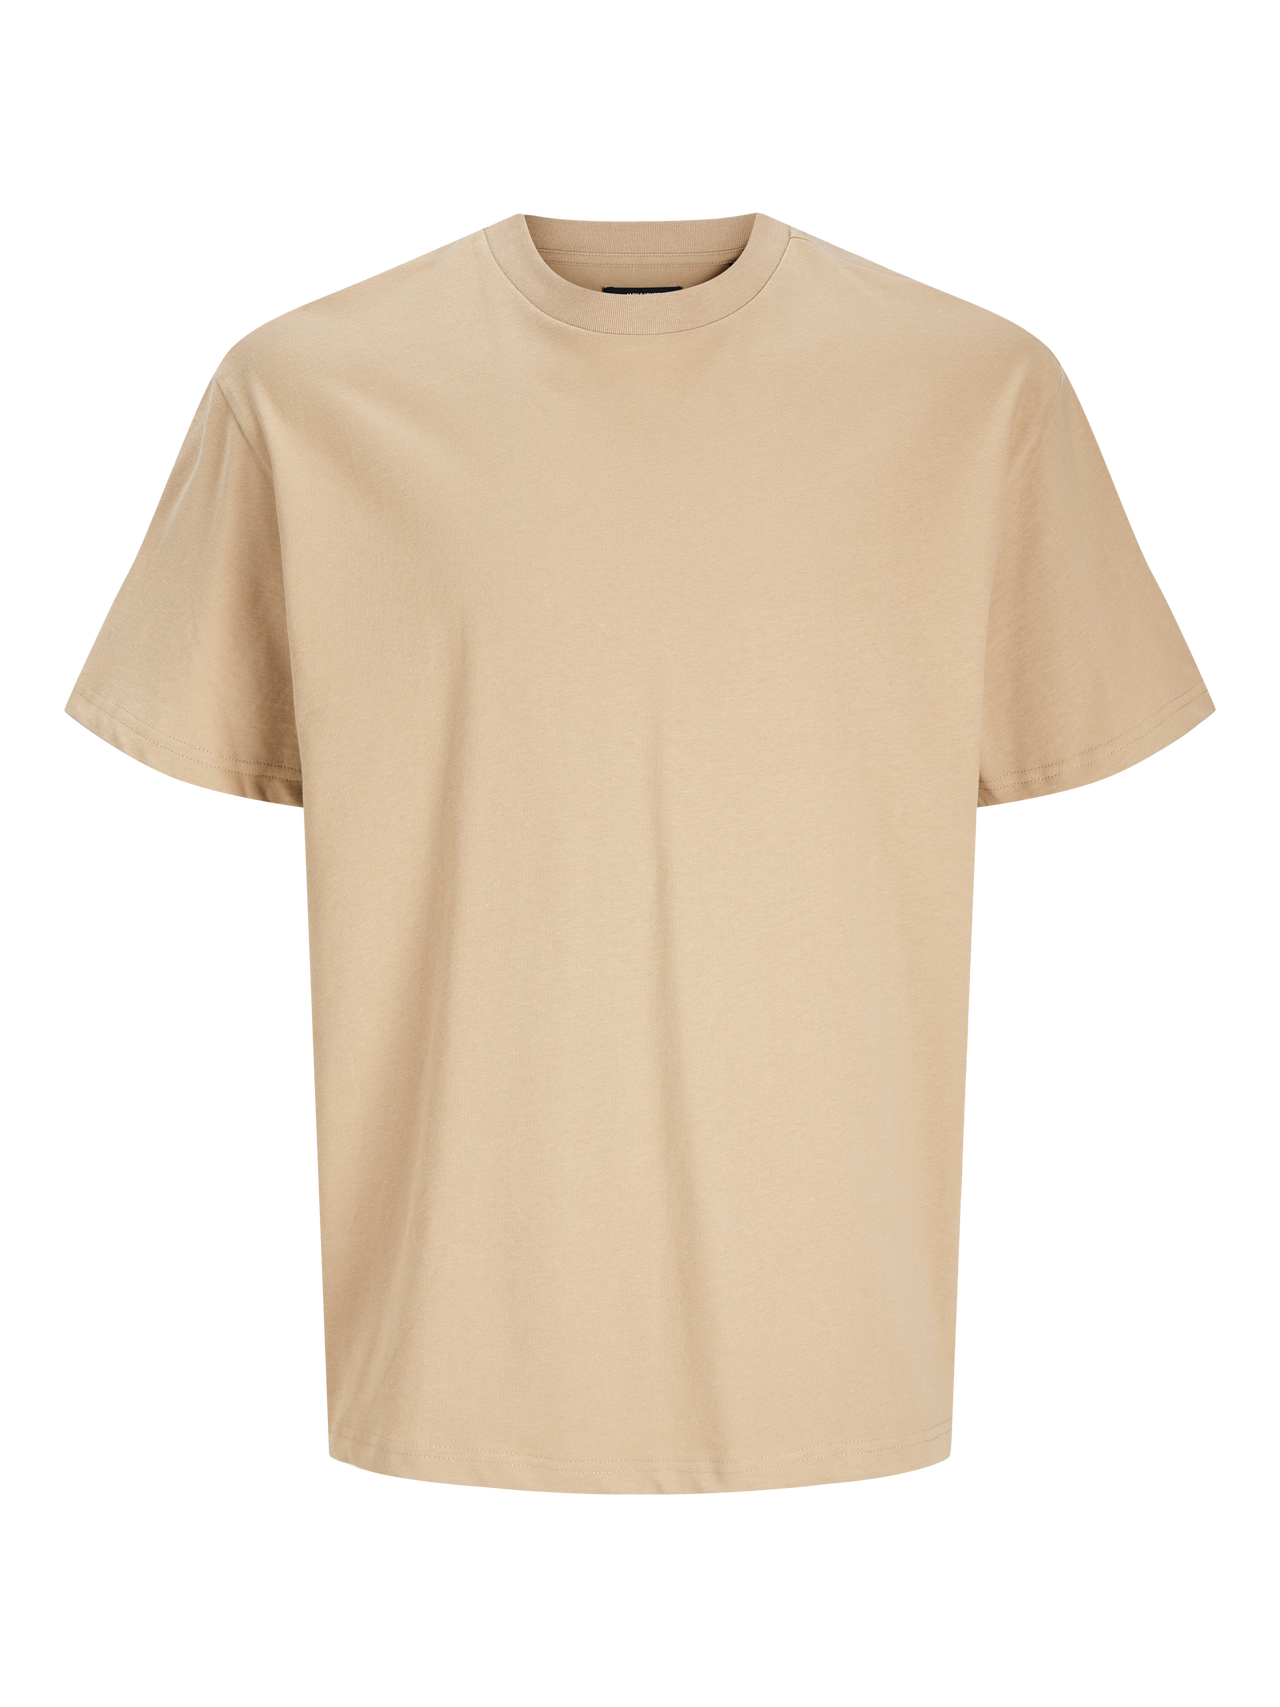 Jack & Jones Gładki Okrągły dekolt T-shirt -Travertine - 12255176